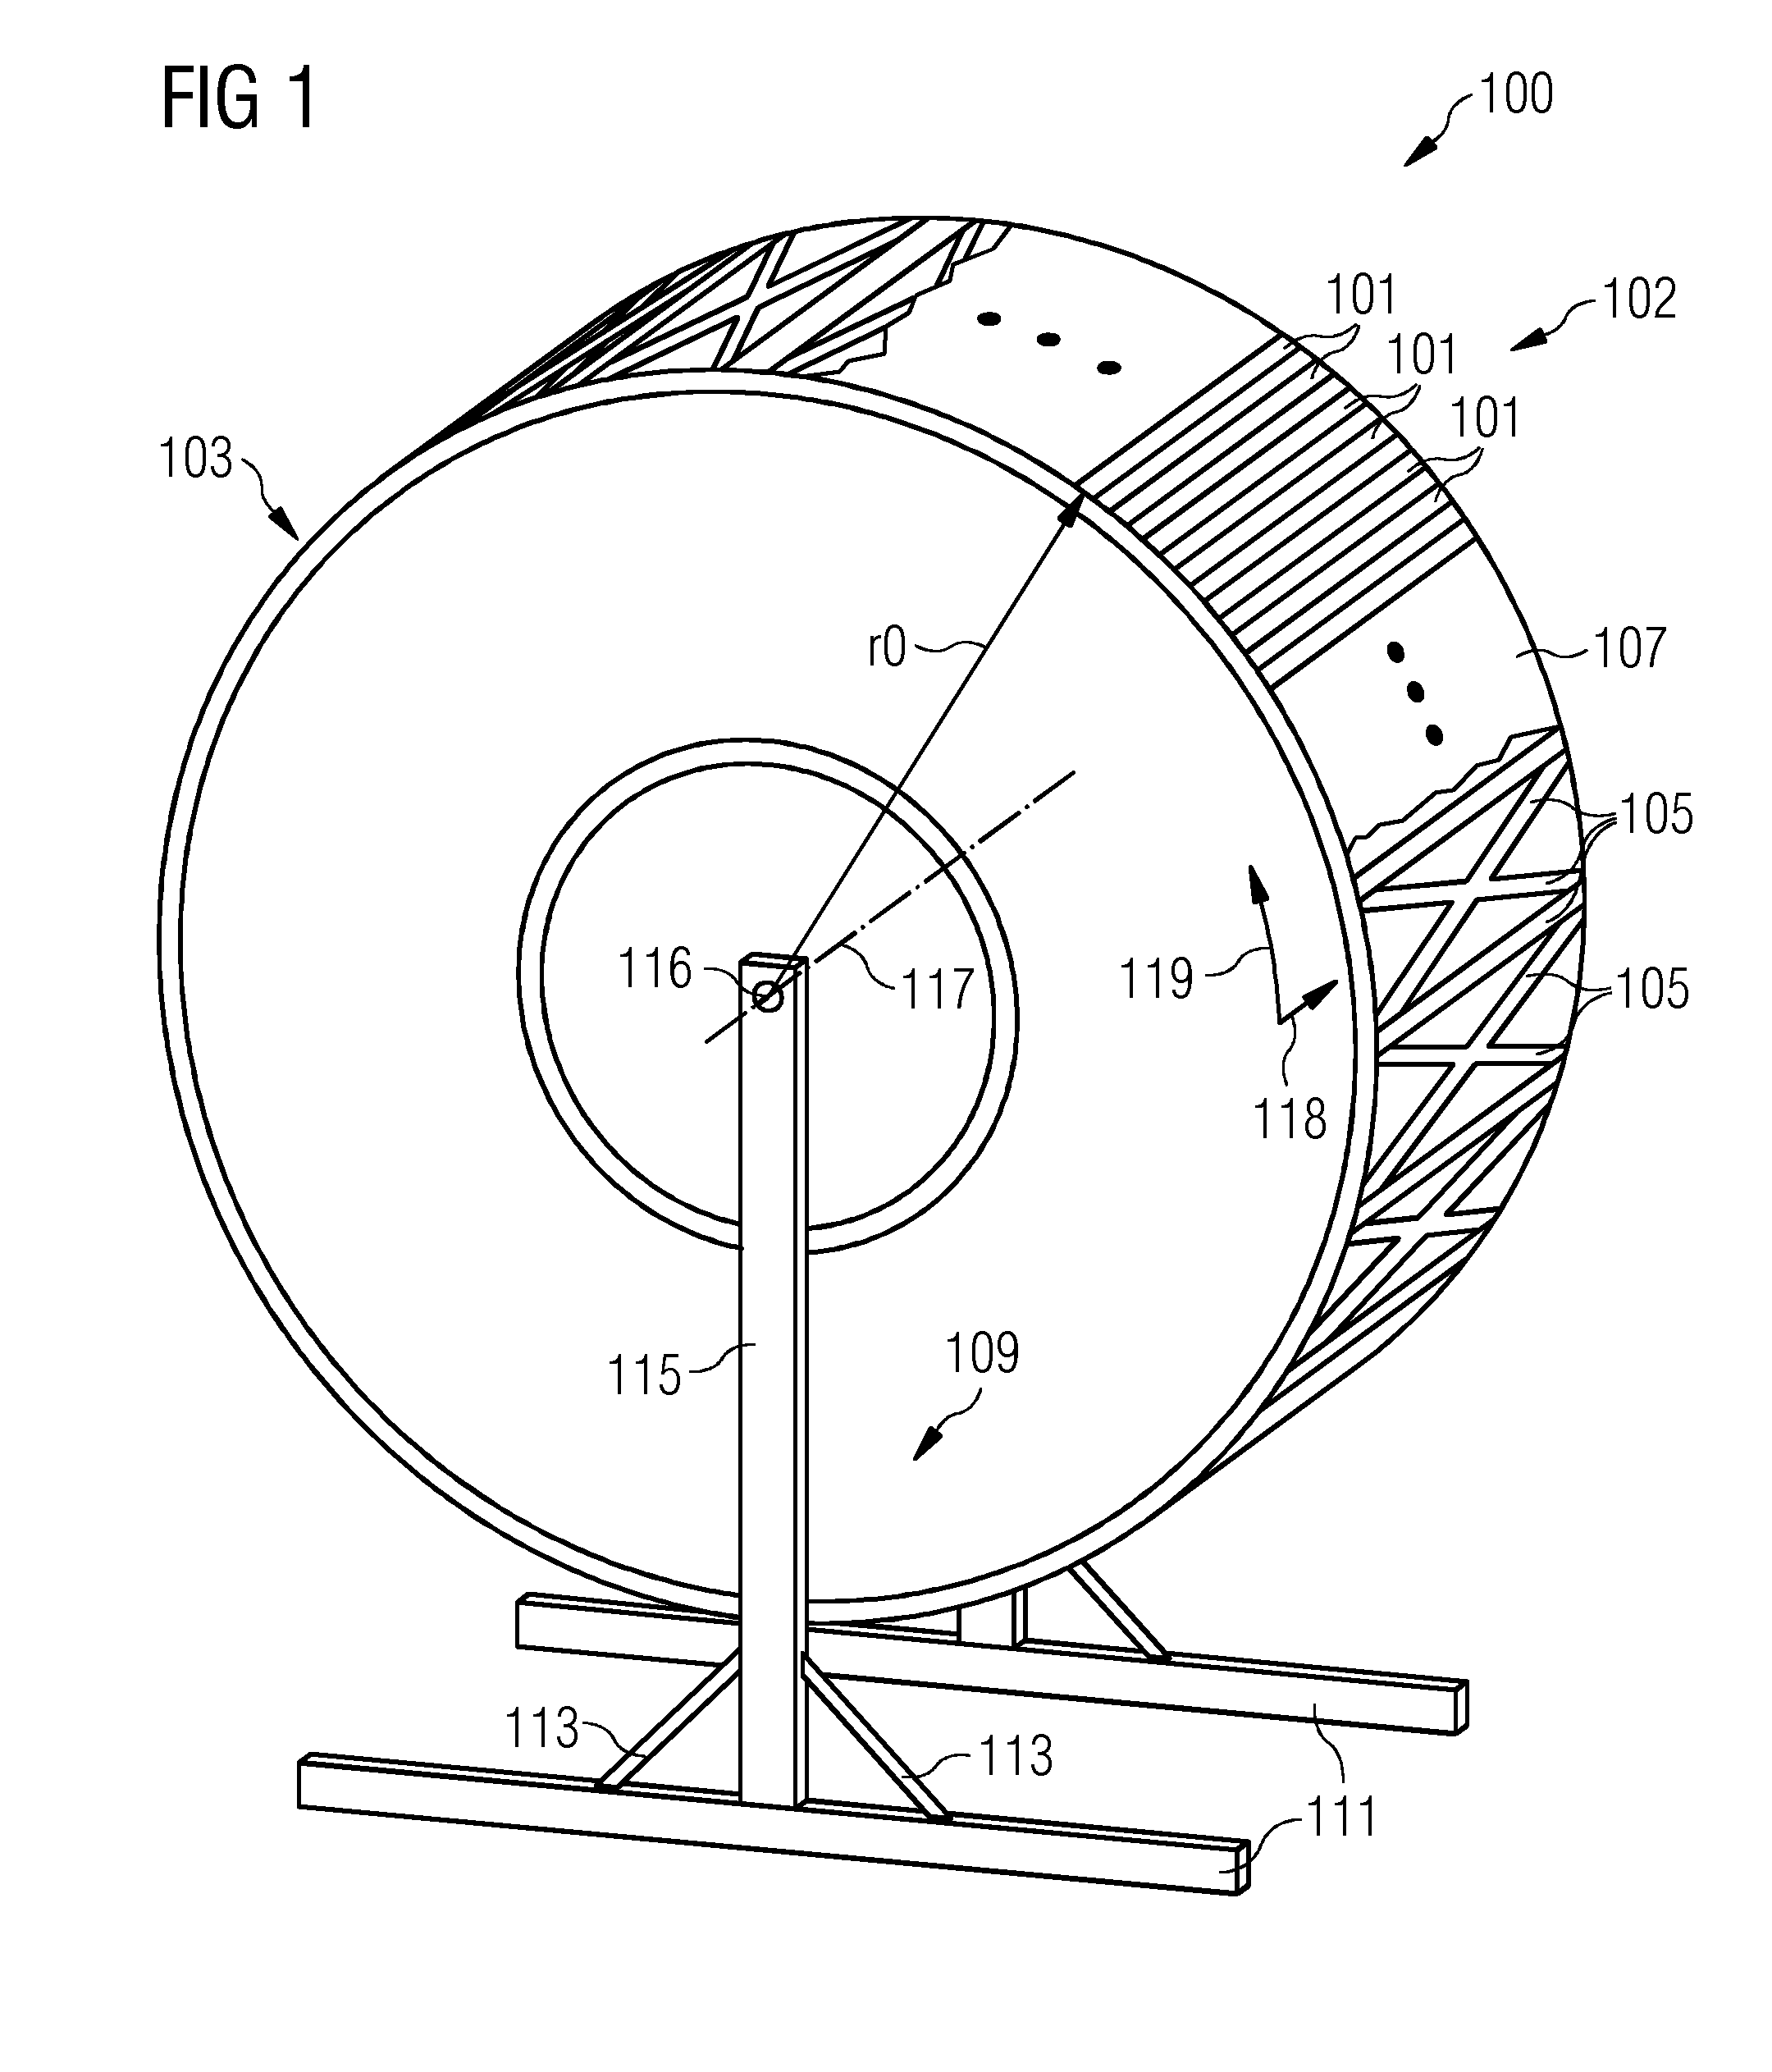 Manufacturing a generator rotor